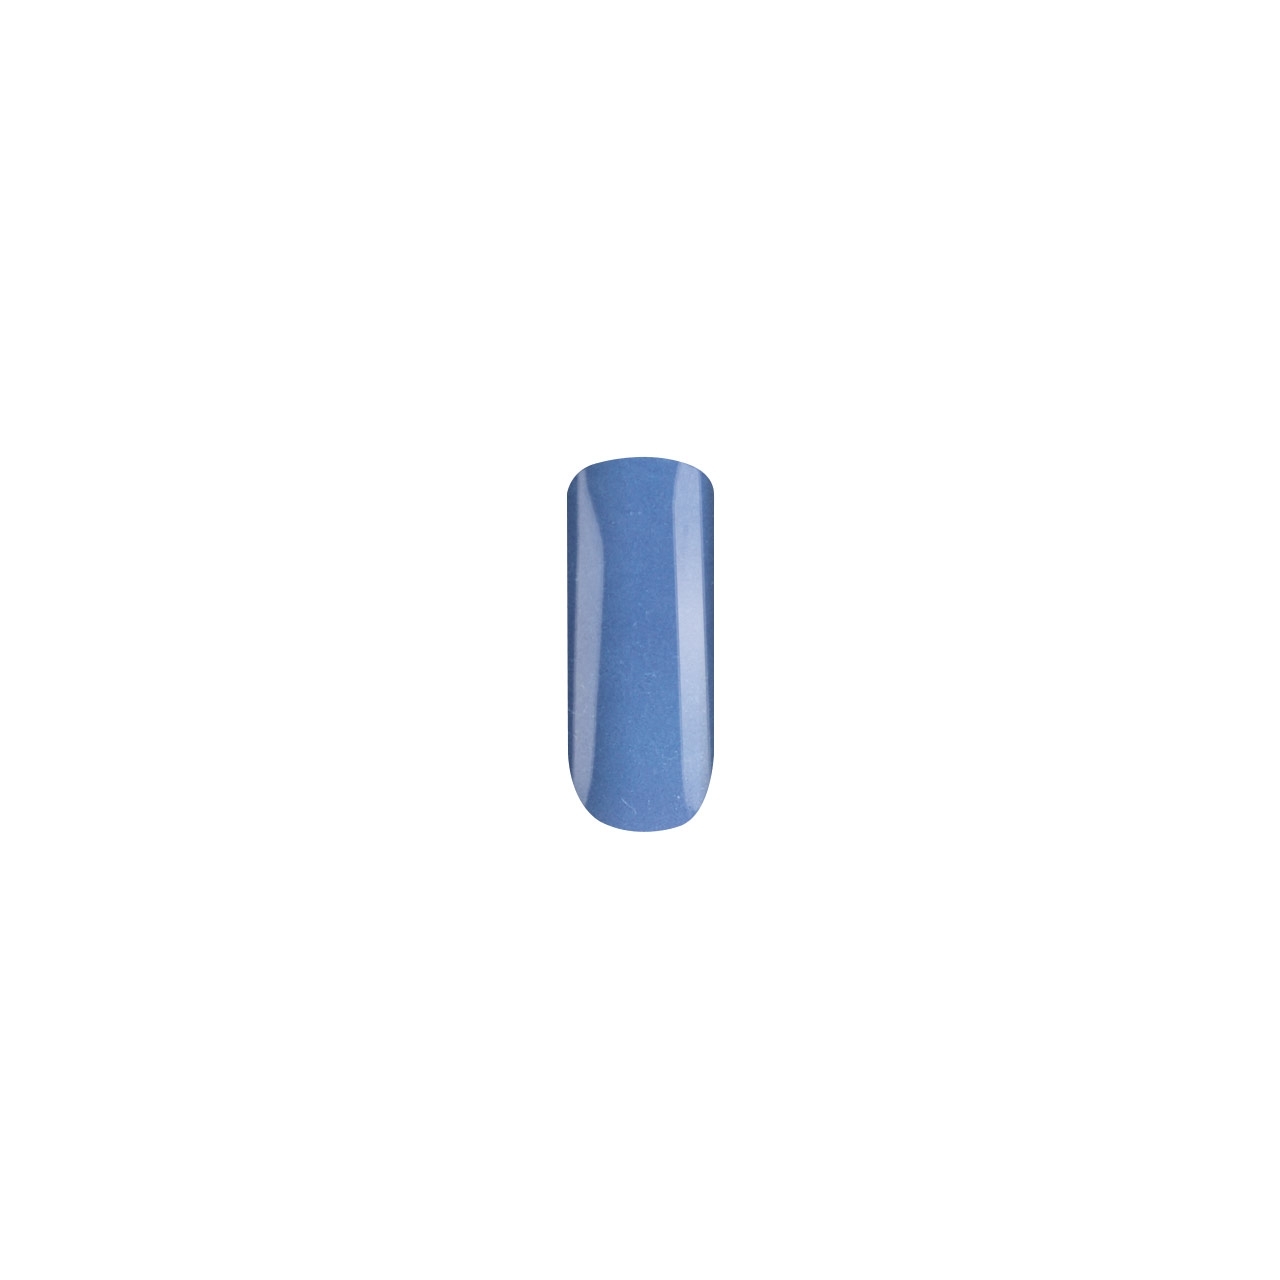 BAEHR BEAUTY CONCEPT - NAILS Nagellack navy blue metallic 11 ml